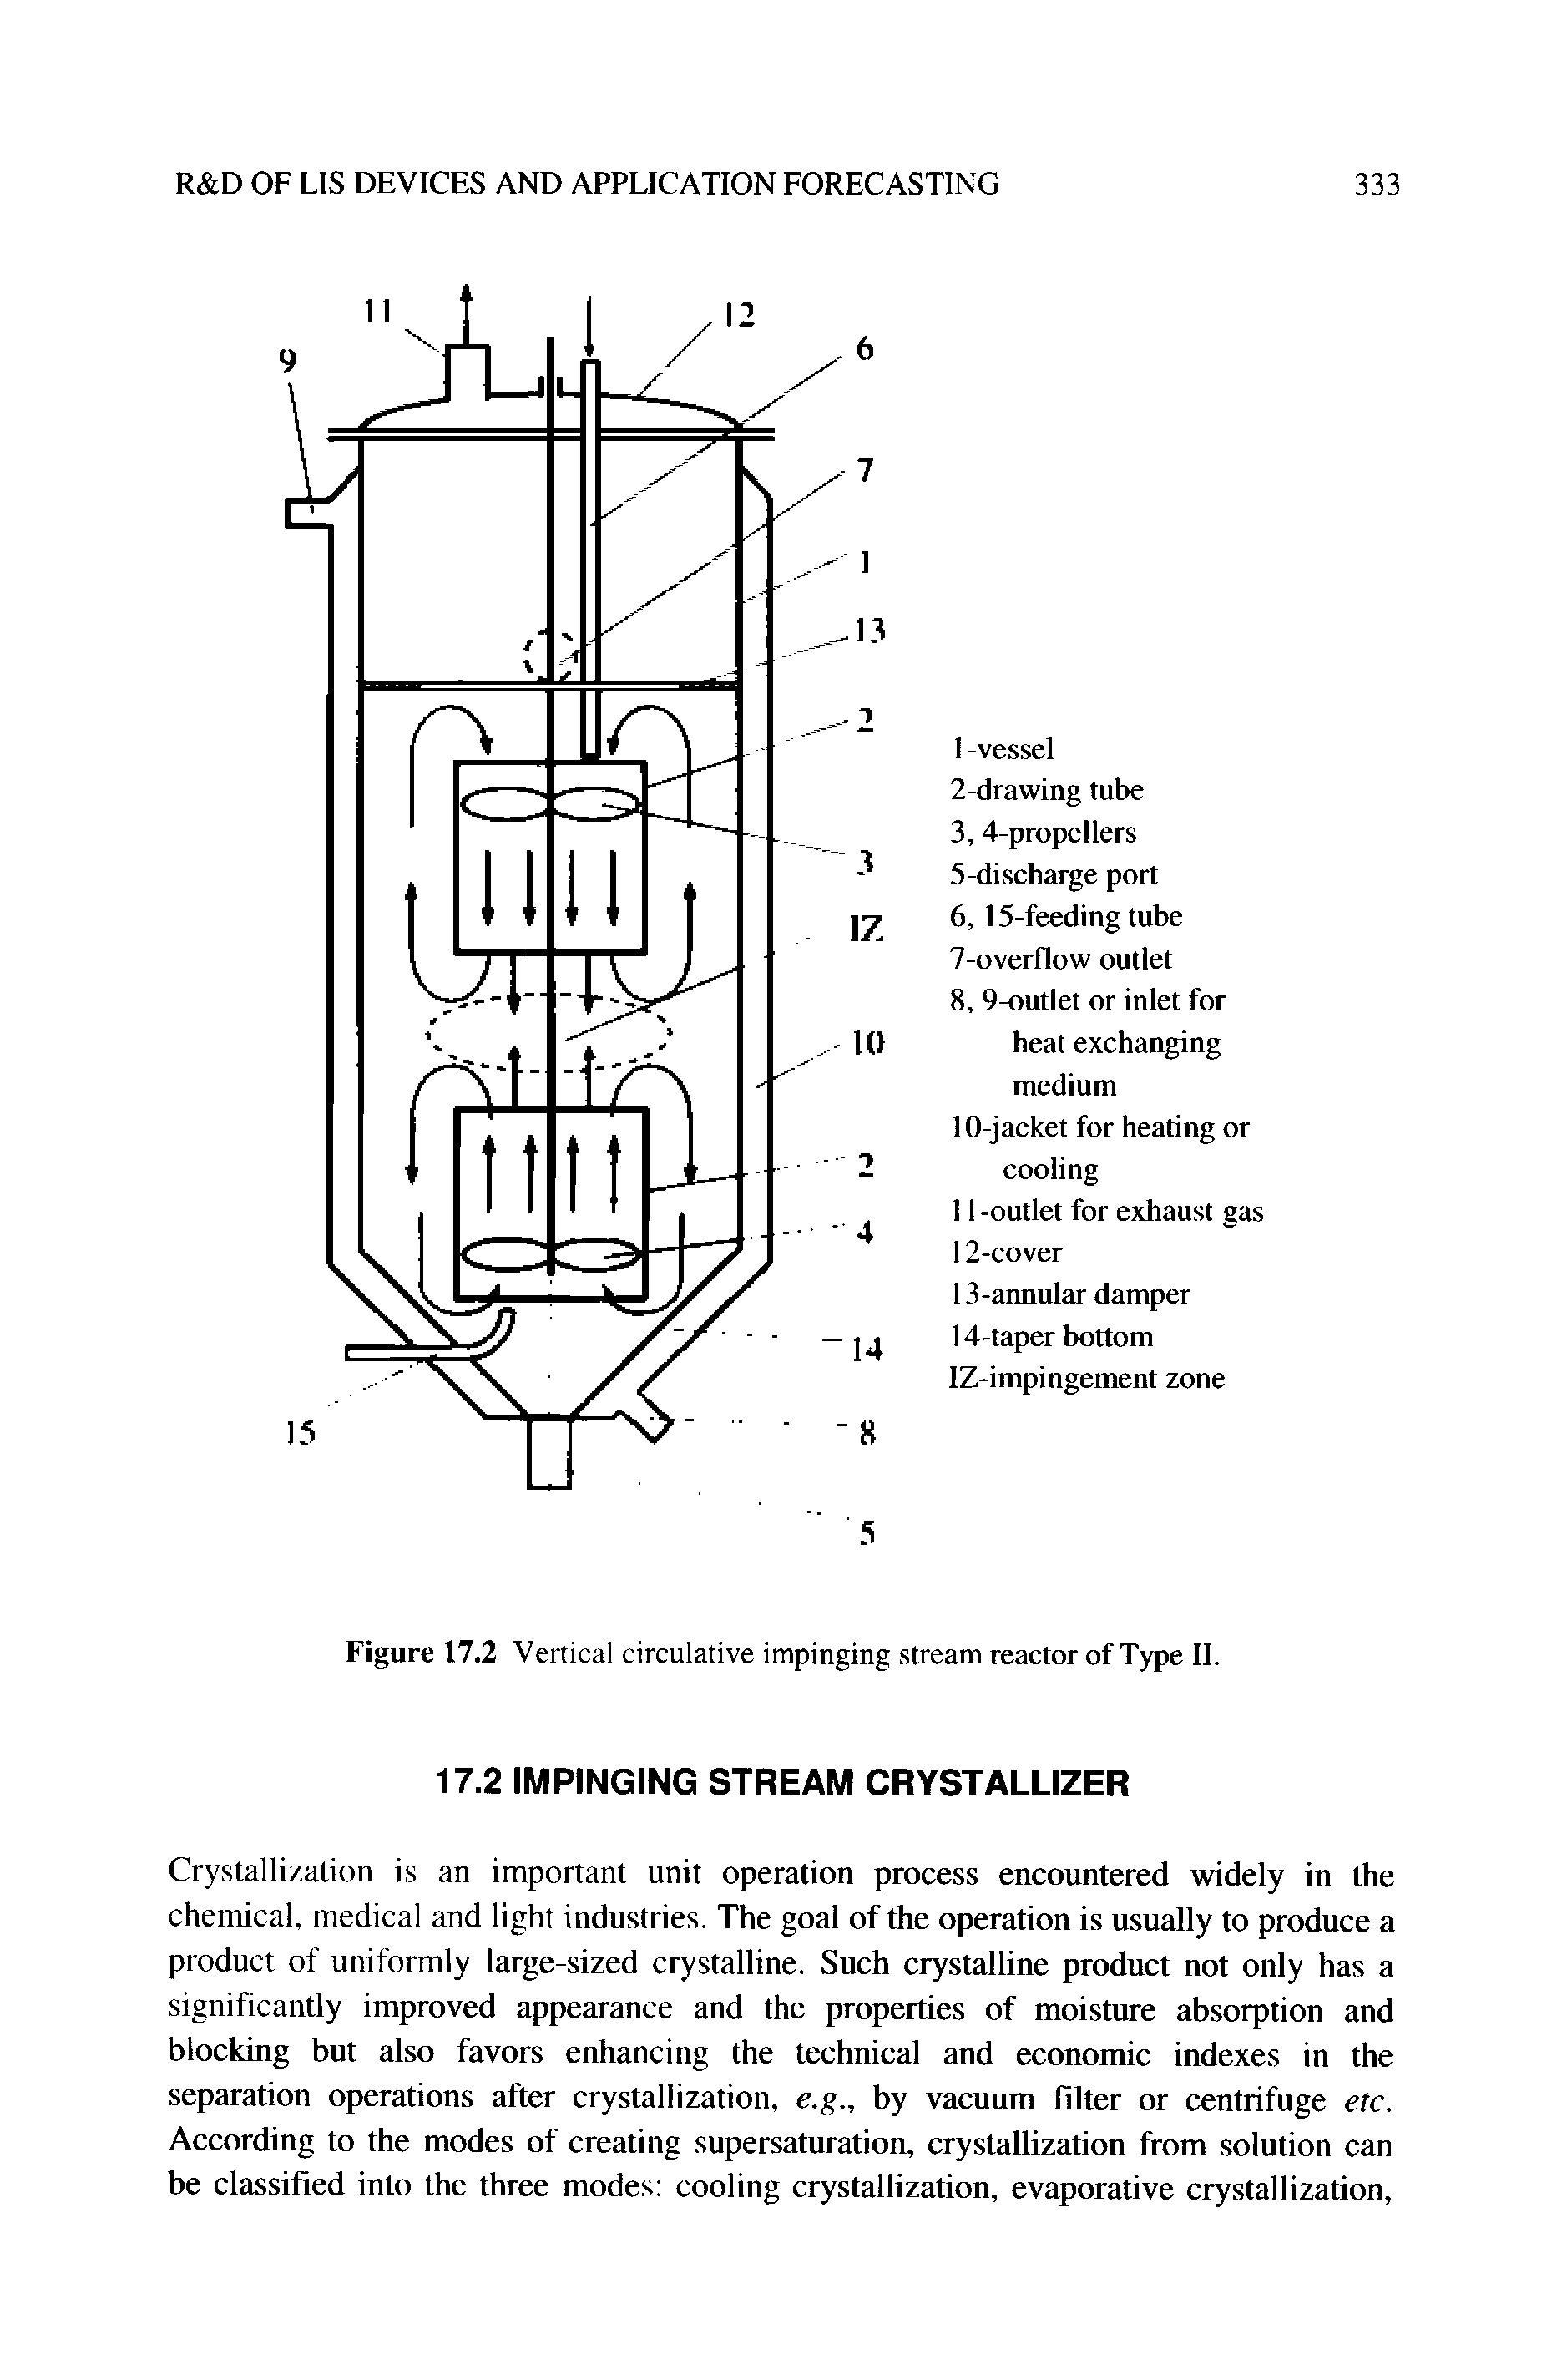 Figure 17.2 Vertical circulative impinging stream reactor of Type II.